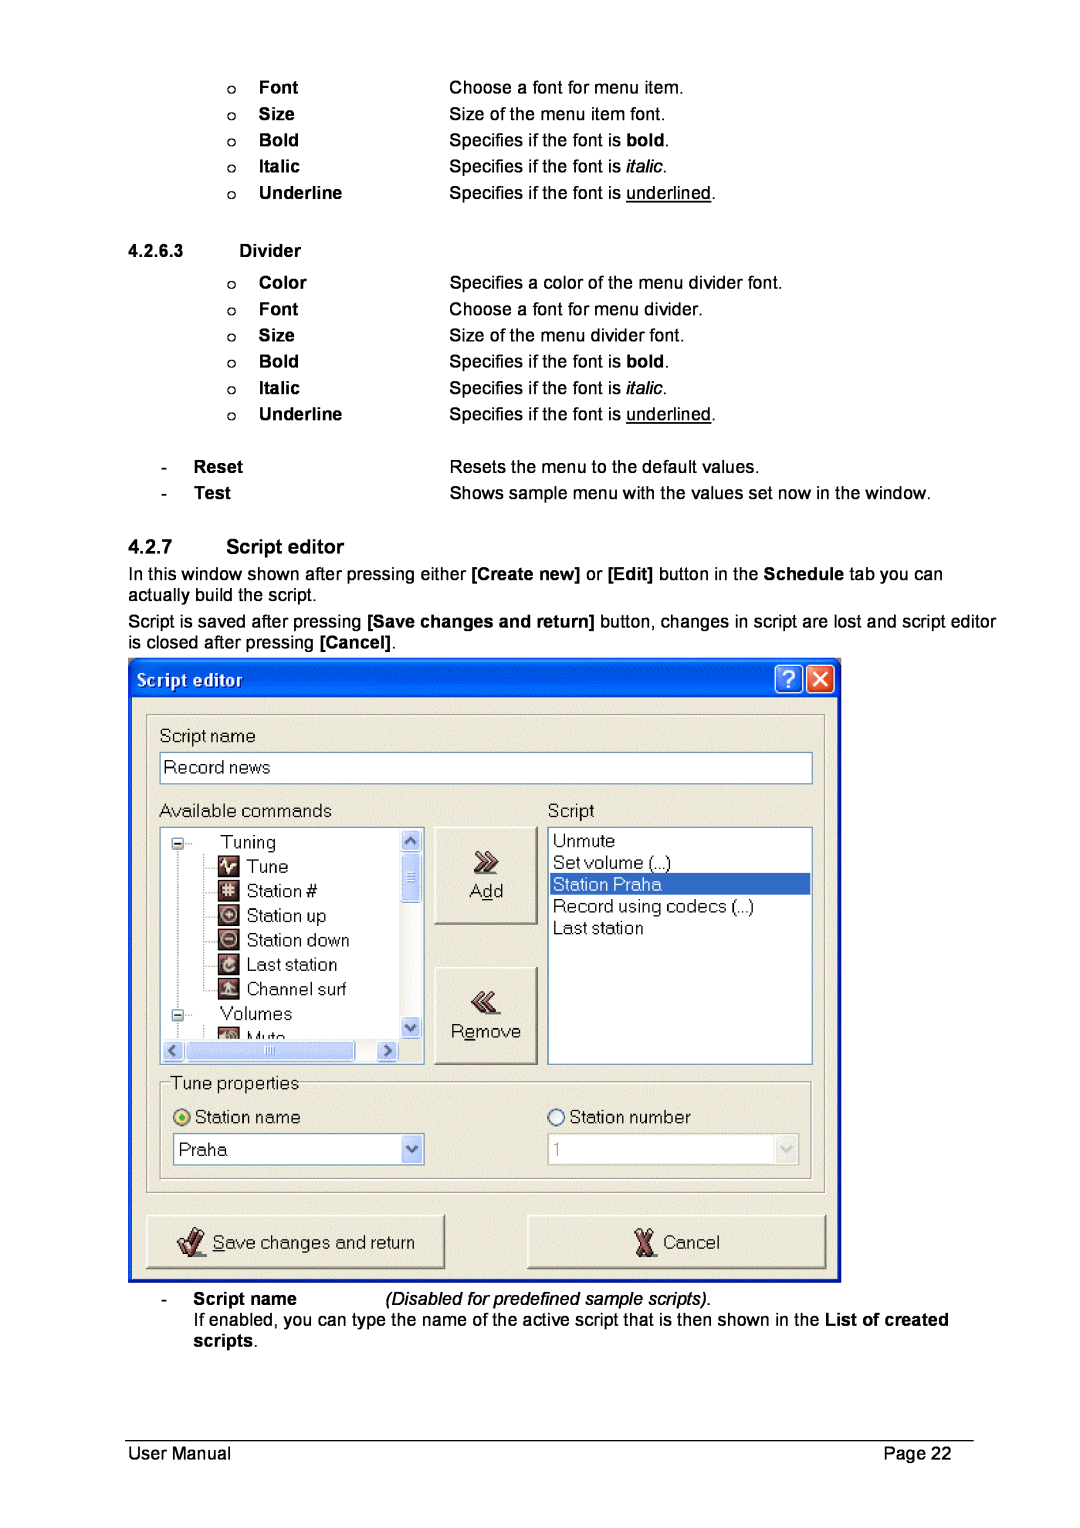 Philips FMU-100 user manual 4.2.7Script editor, Font, Size, Bold, Italic, Underline, 4.2.6.3Divider, Color, Reset, Test 